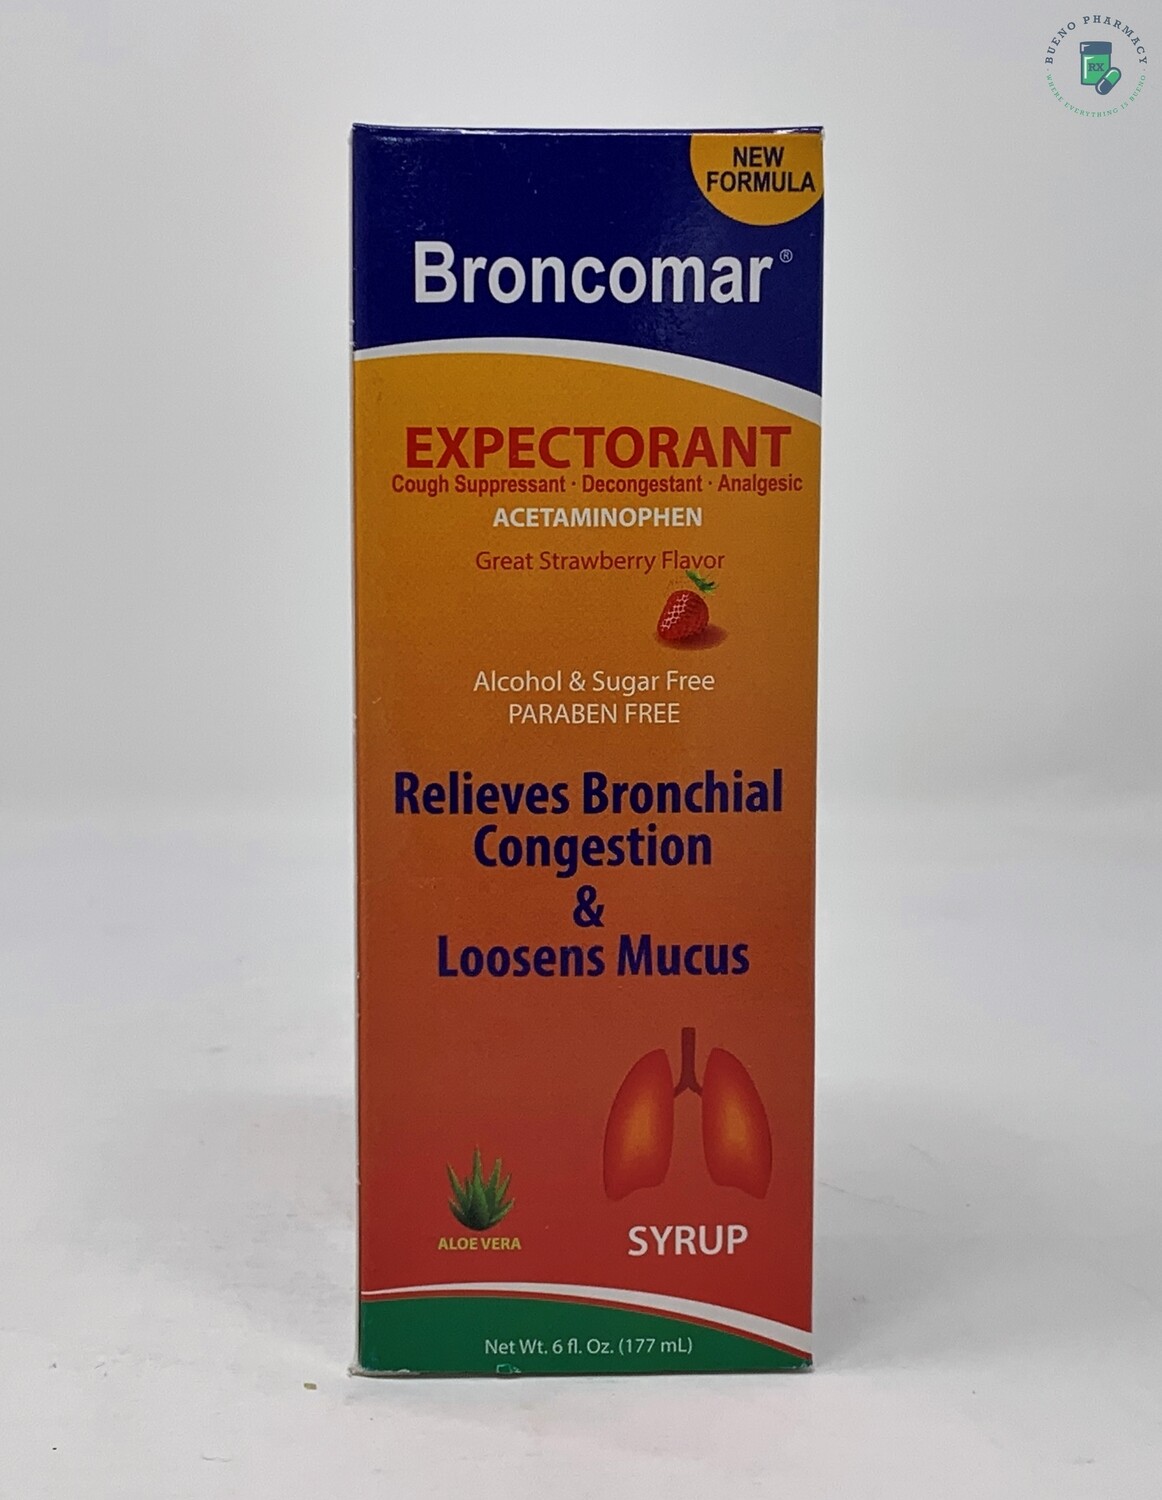 Broncomar Expectorant Cough Suppressant Decongestant Analgesic 6FLOZ